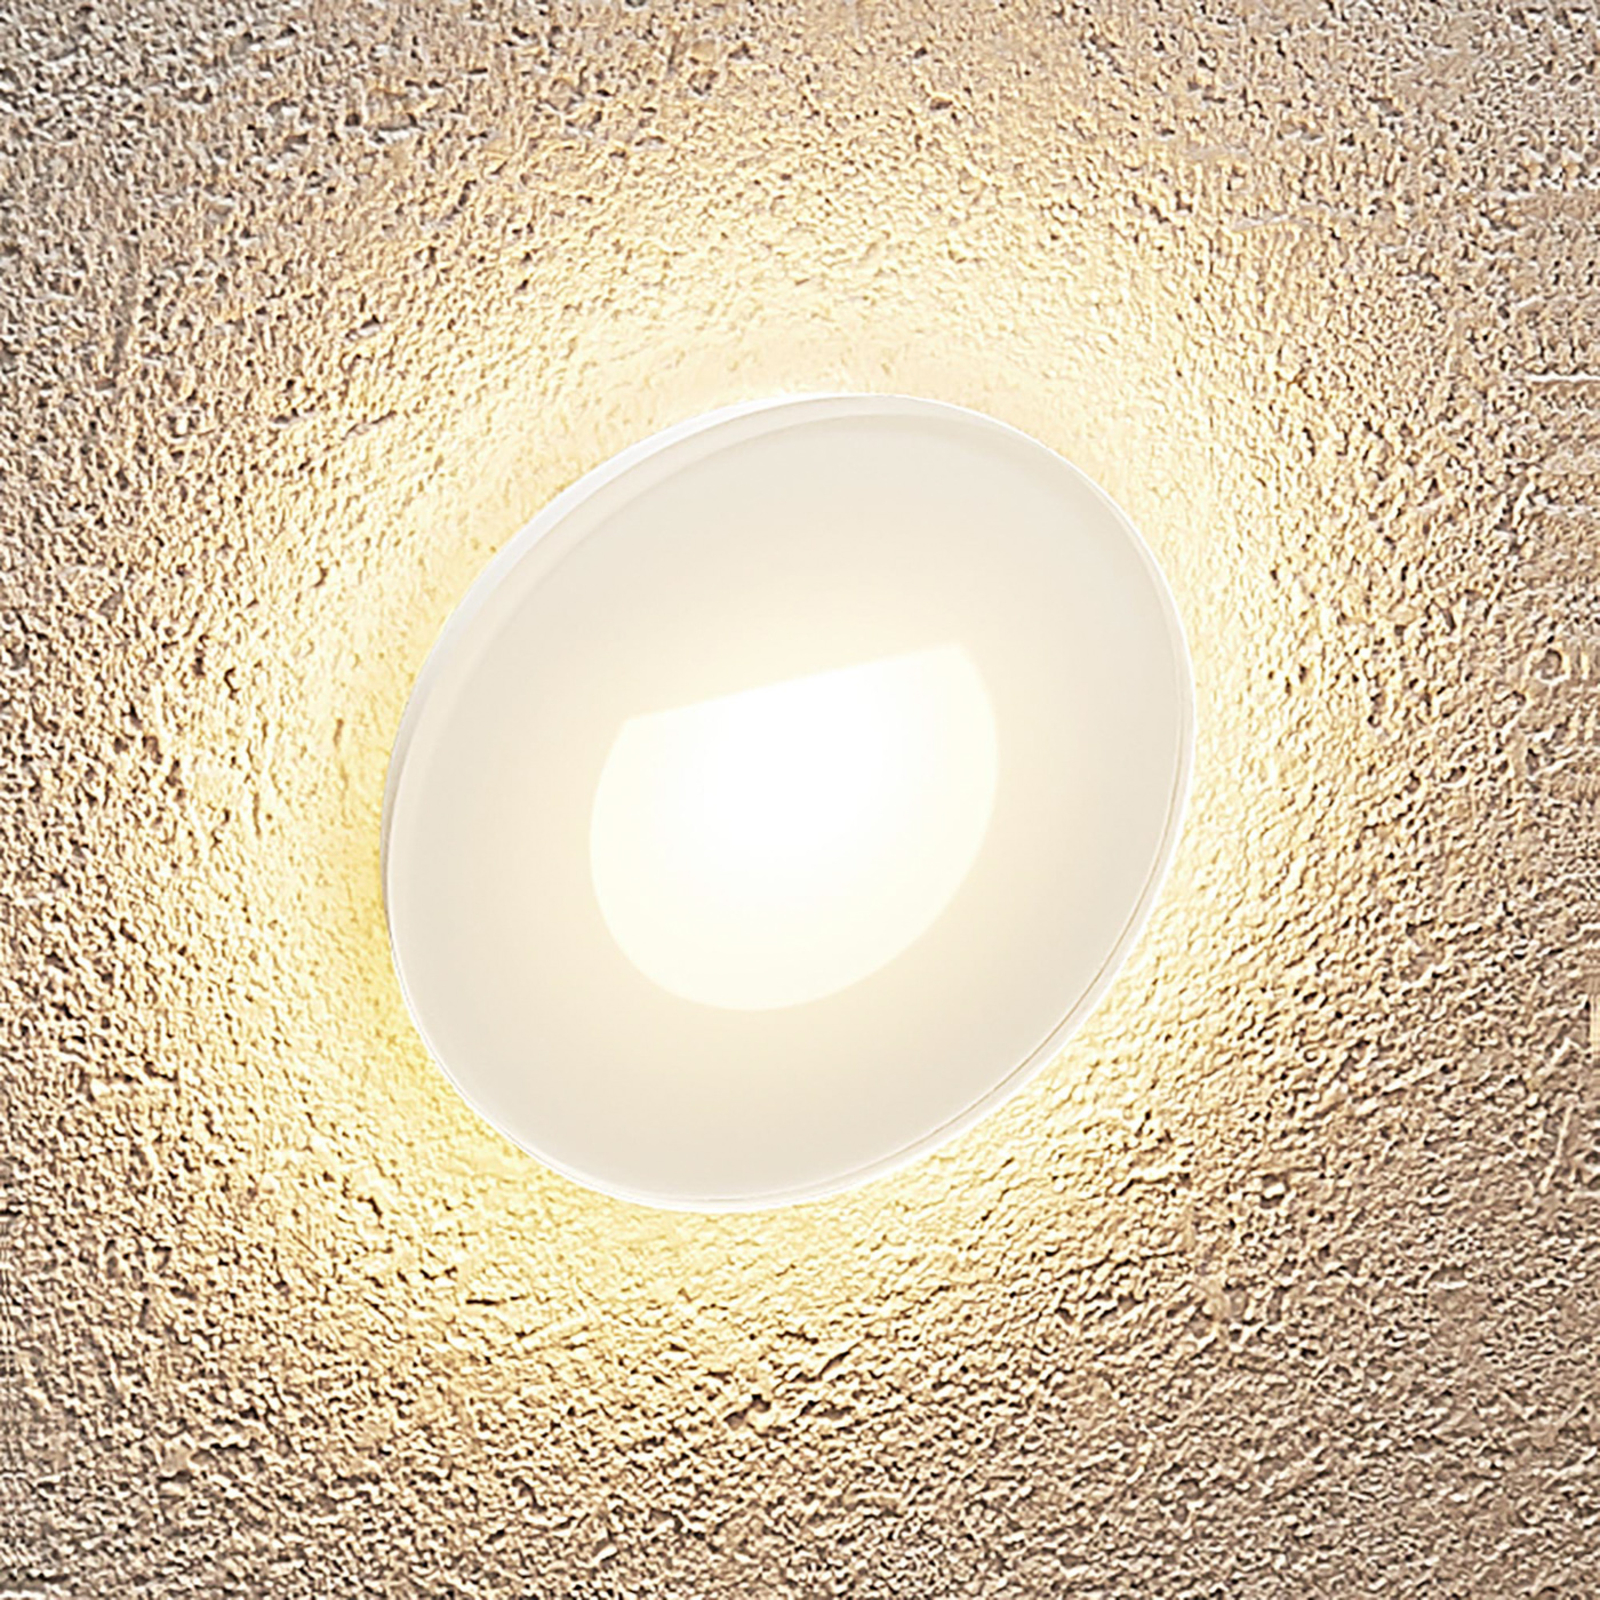 Arcchio Vexi LED-downlight, rund, matt hvit